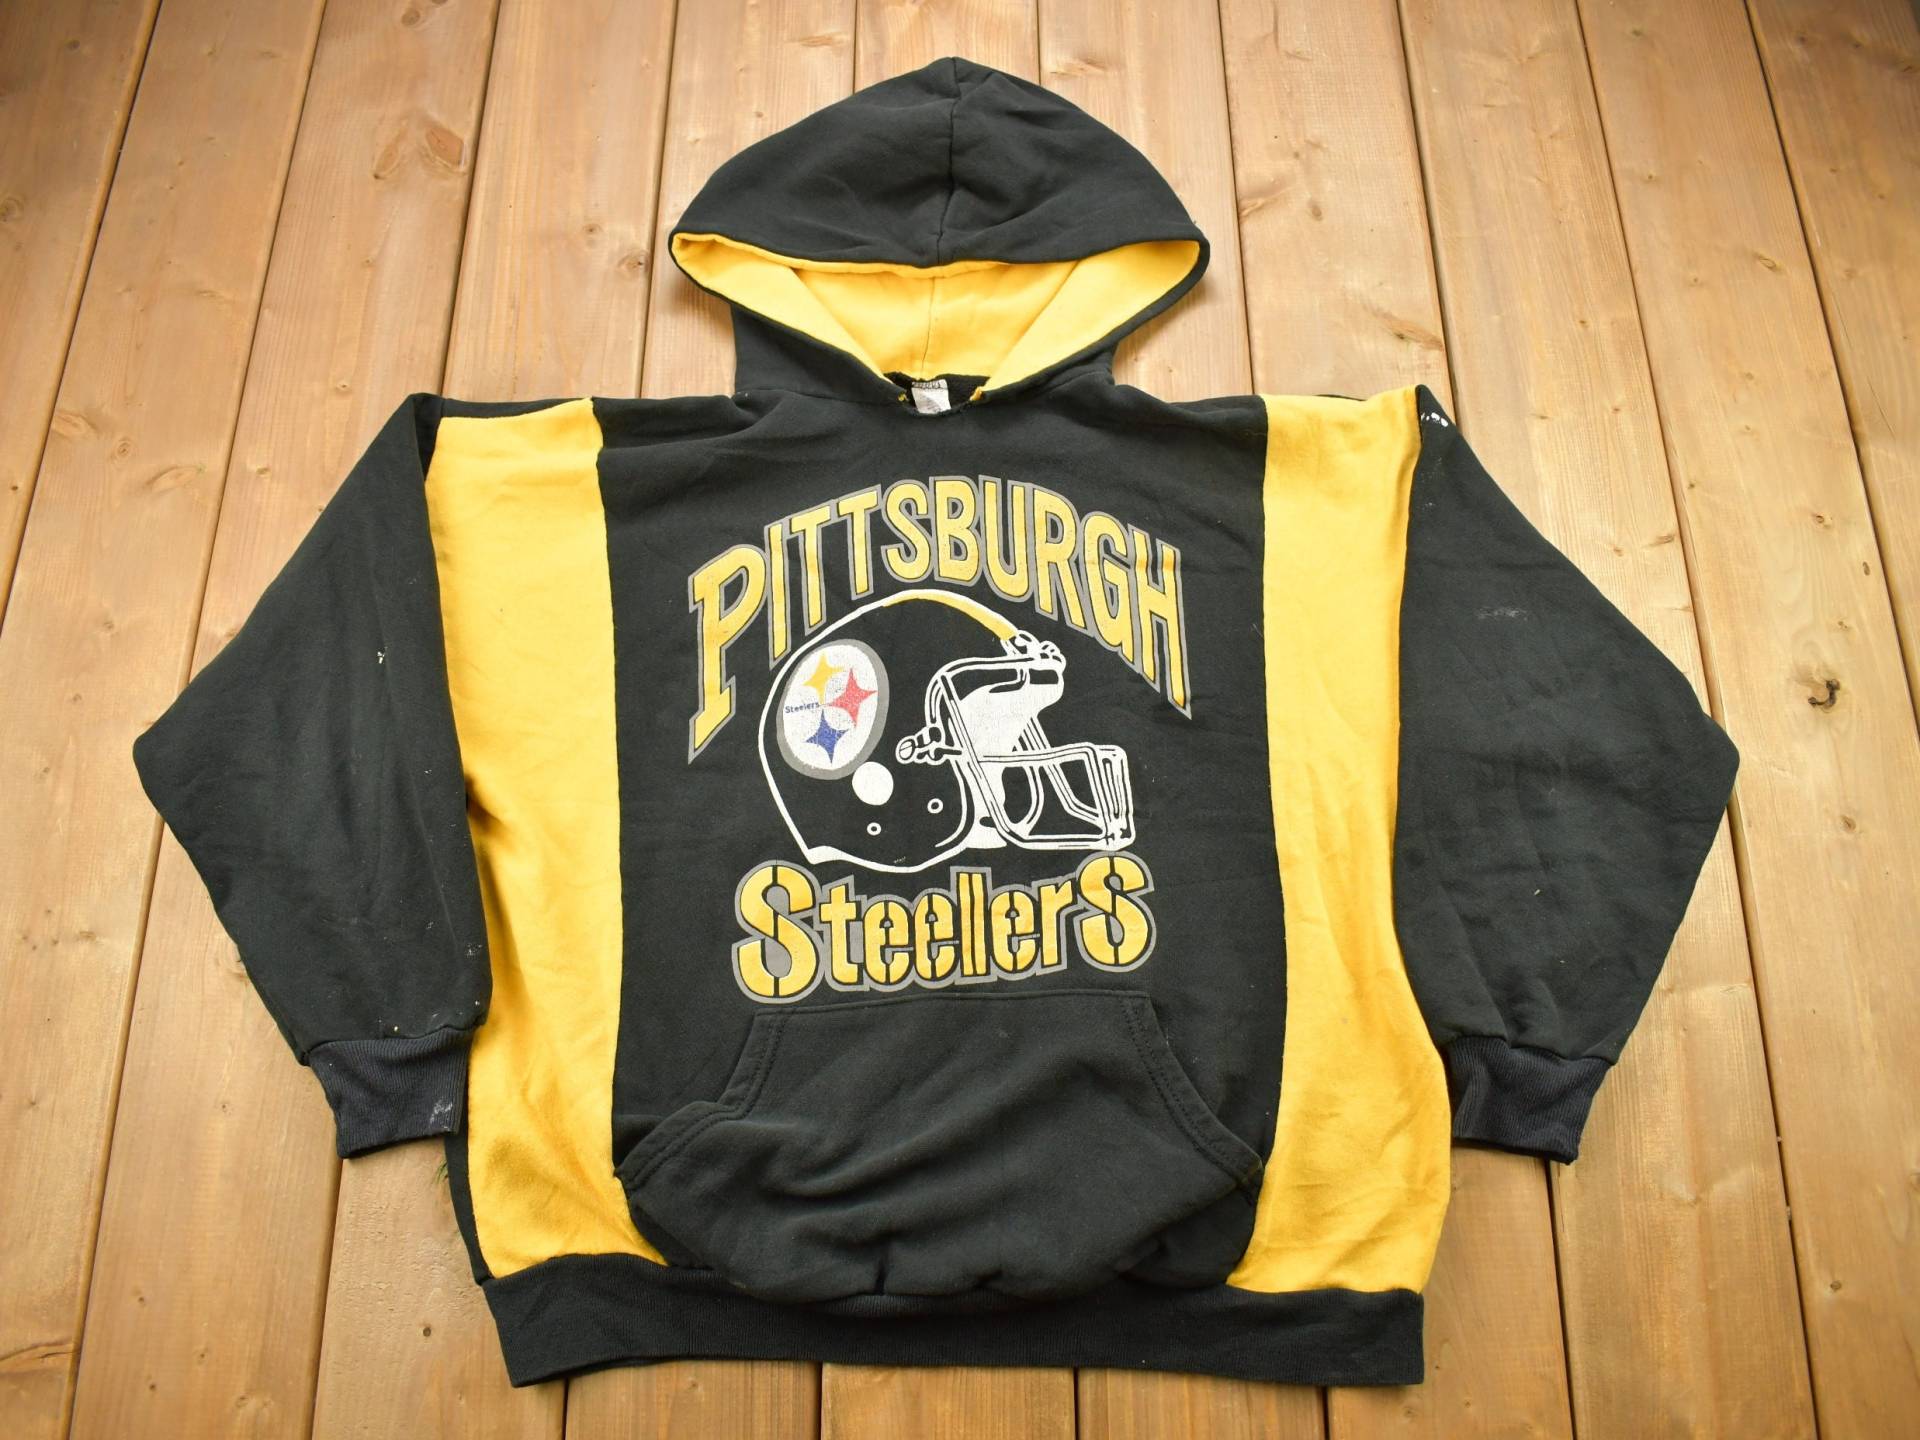 Vintage 1990Er Jahre Pittsburgh Steelers Nfl Color Block Hoodie/Made in Usa Fußball Sportbekleidung von Lostboysvintage